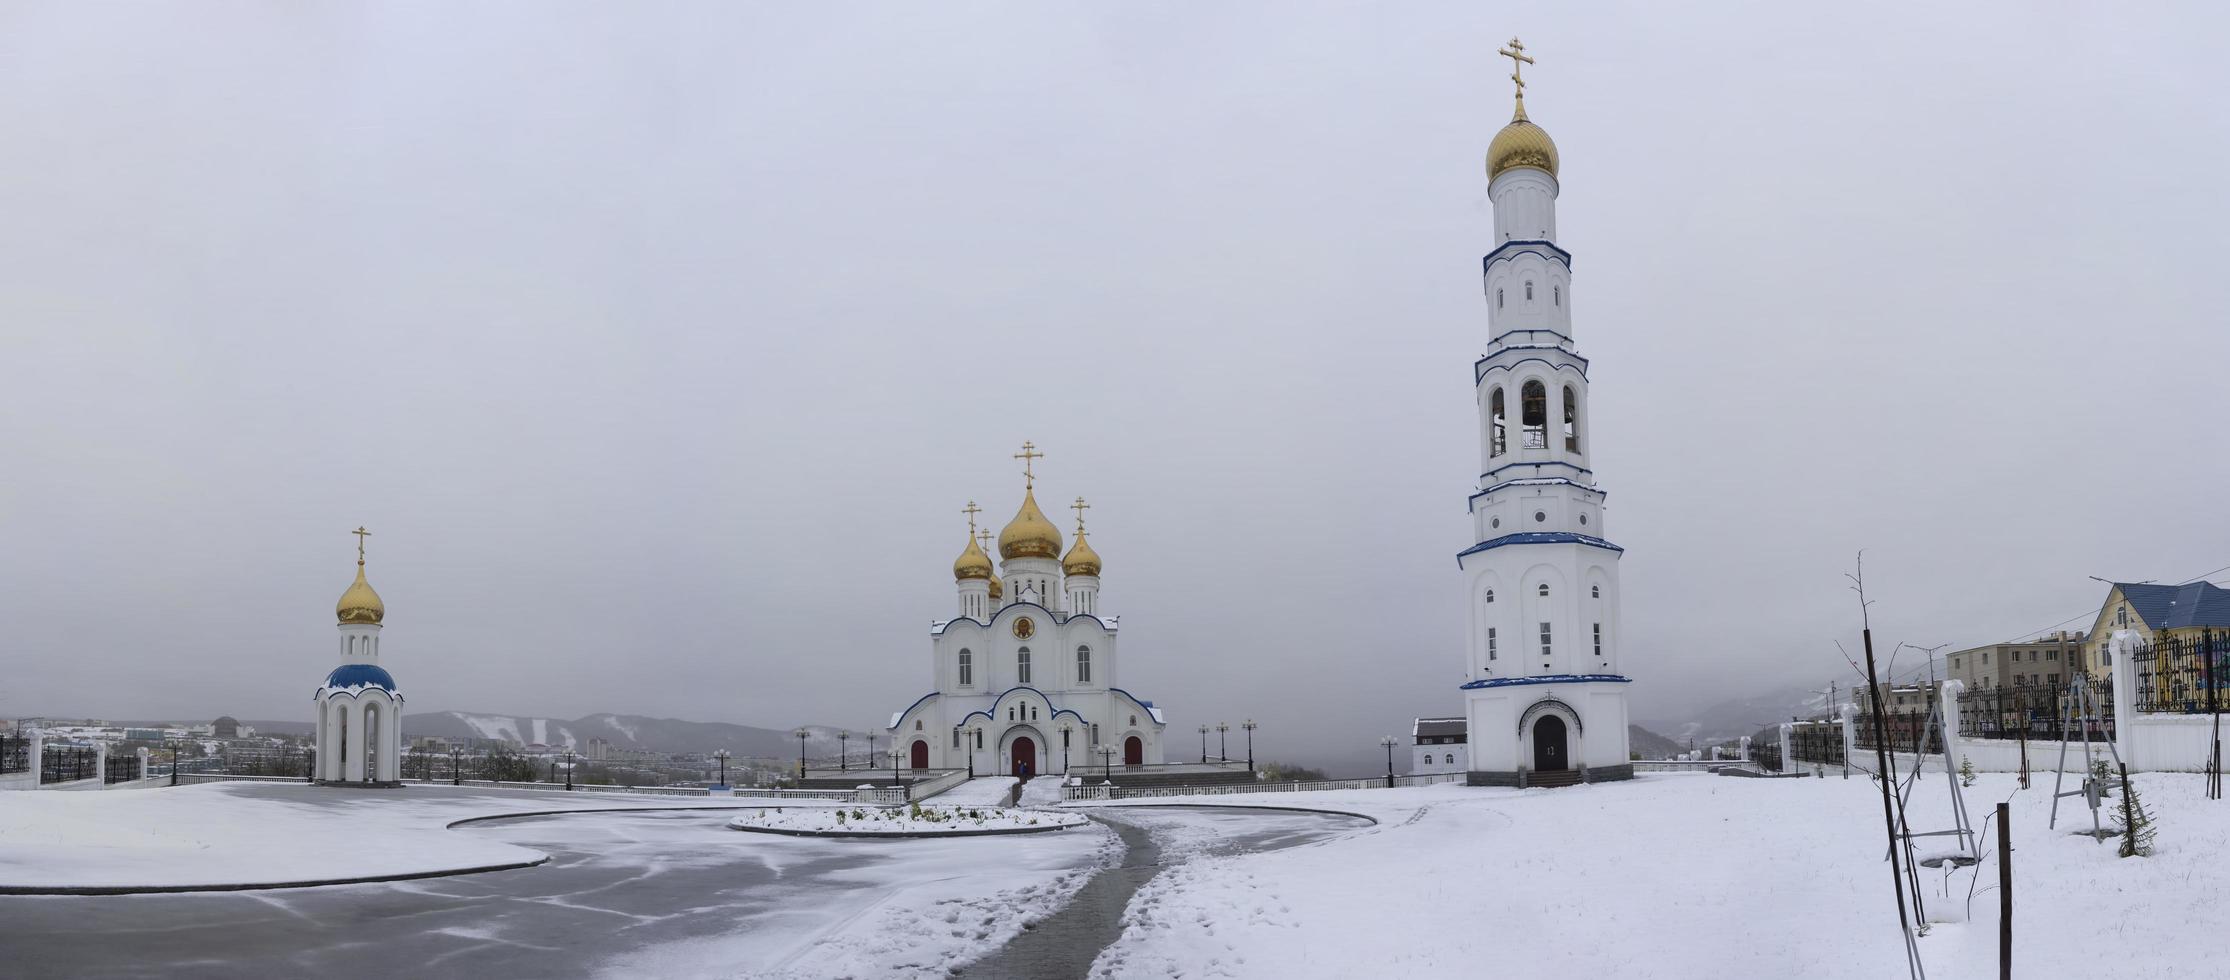 catedral da sagrada trindade em petropavlovsk-kamchatsky, rússia foto